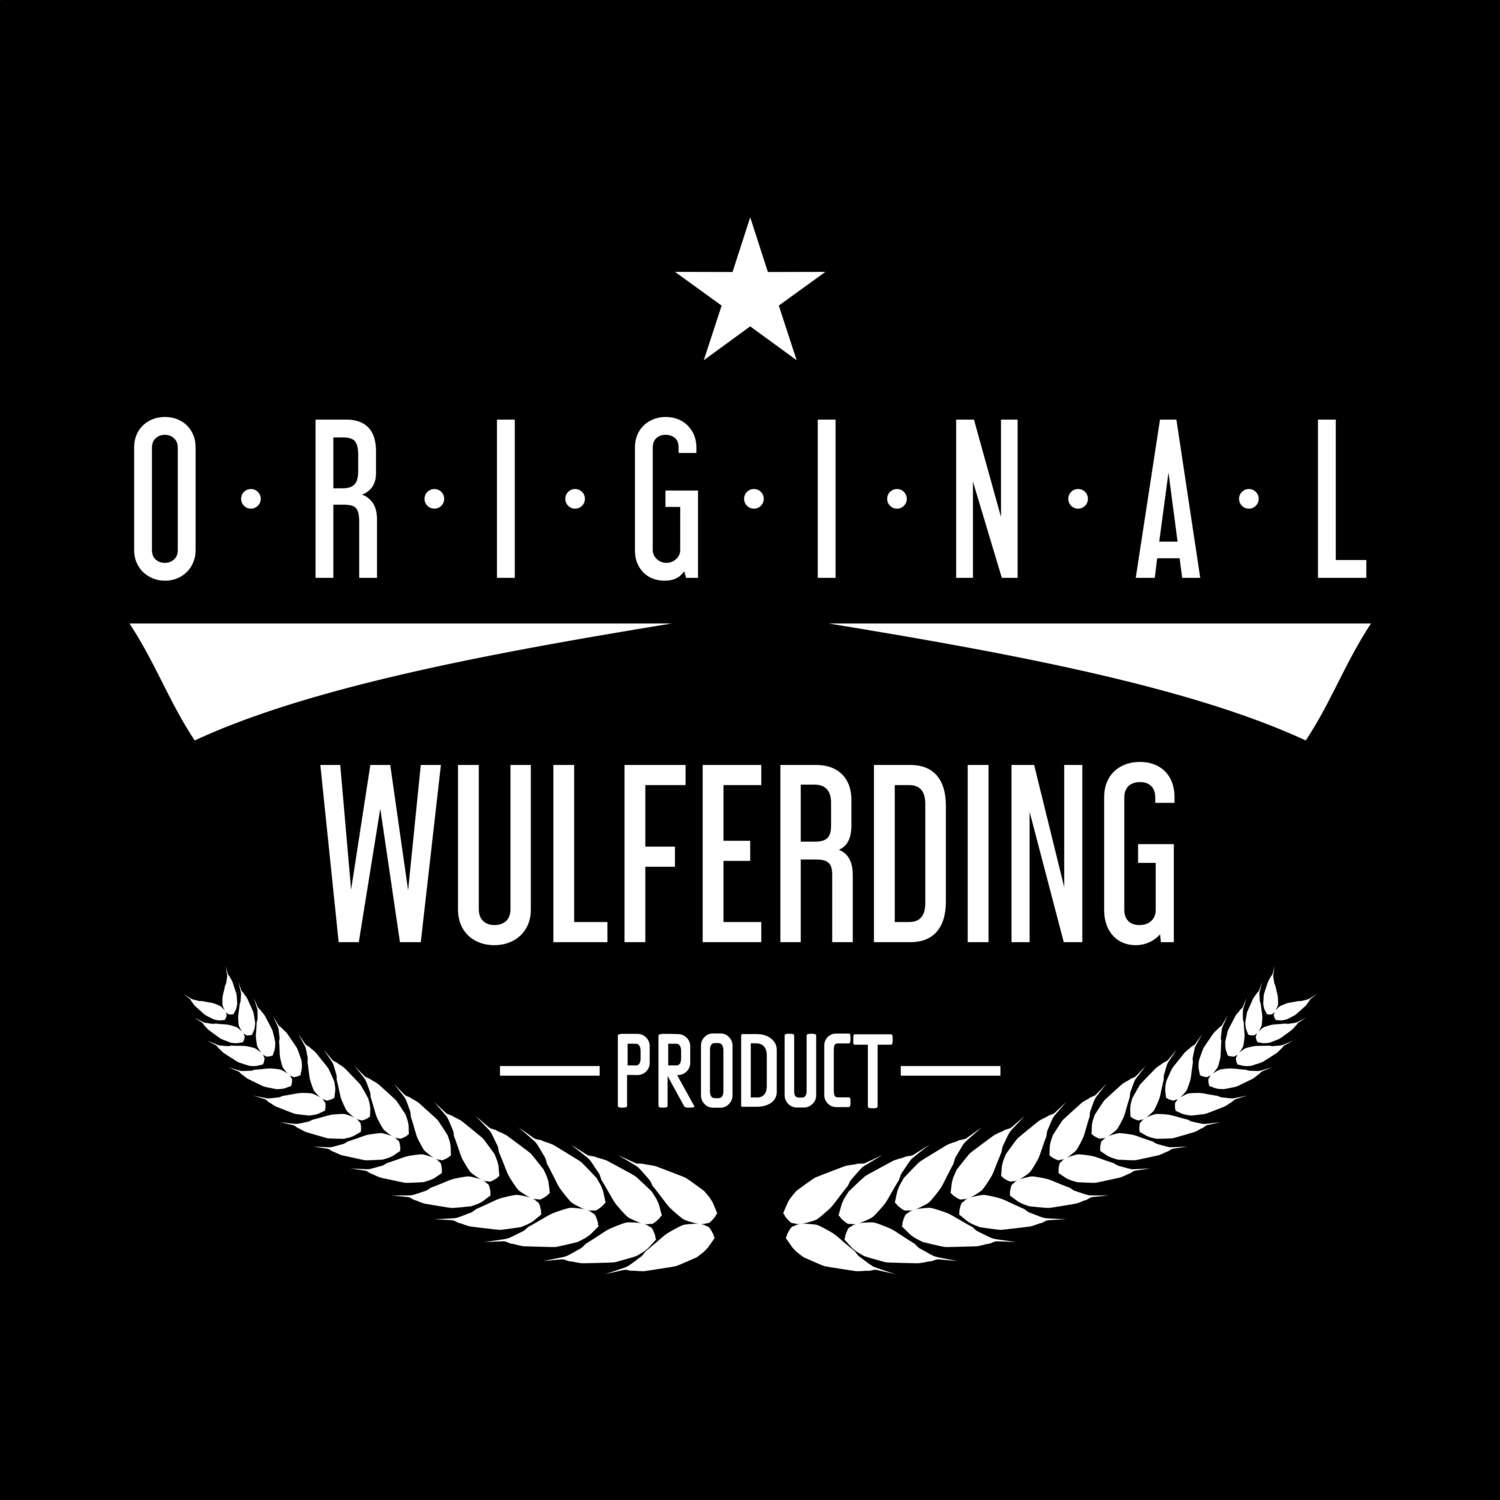 Wulferding T-Shirt »Original Product«